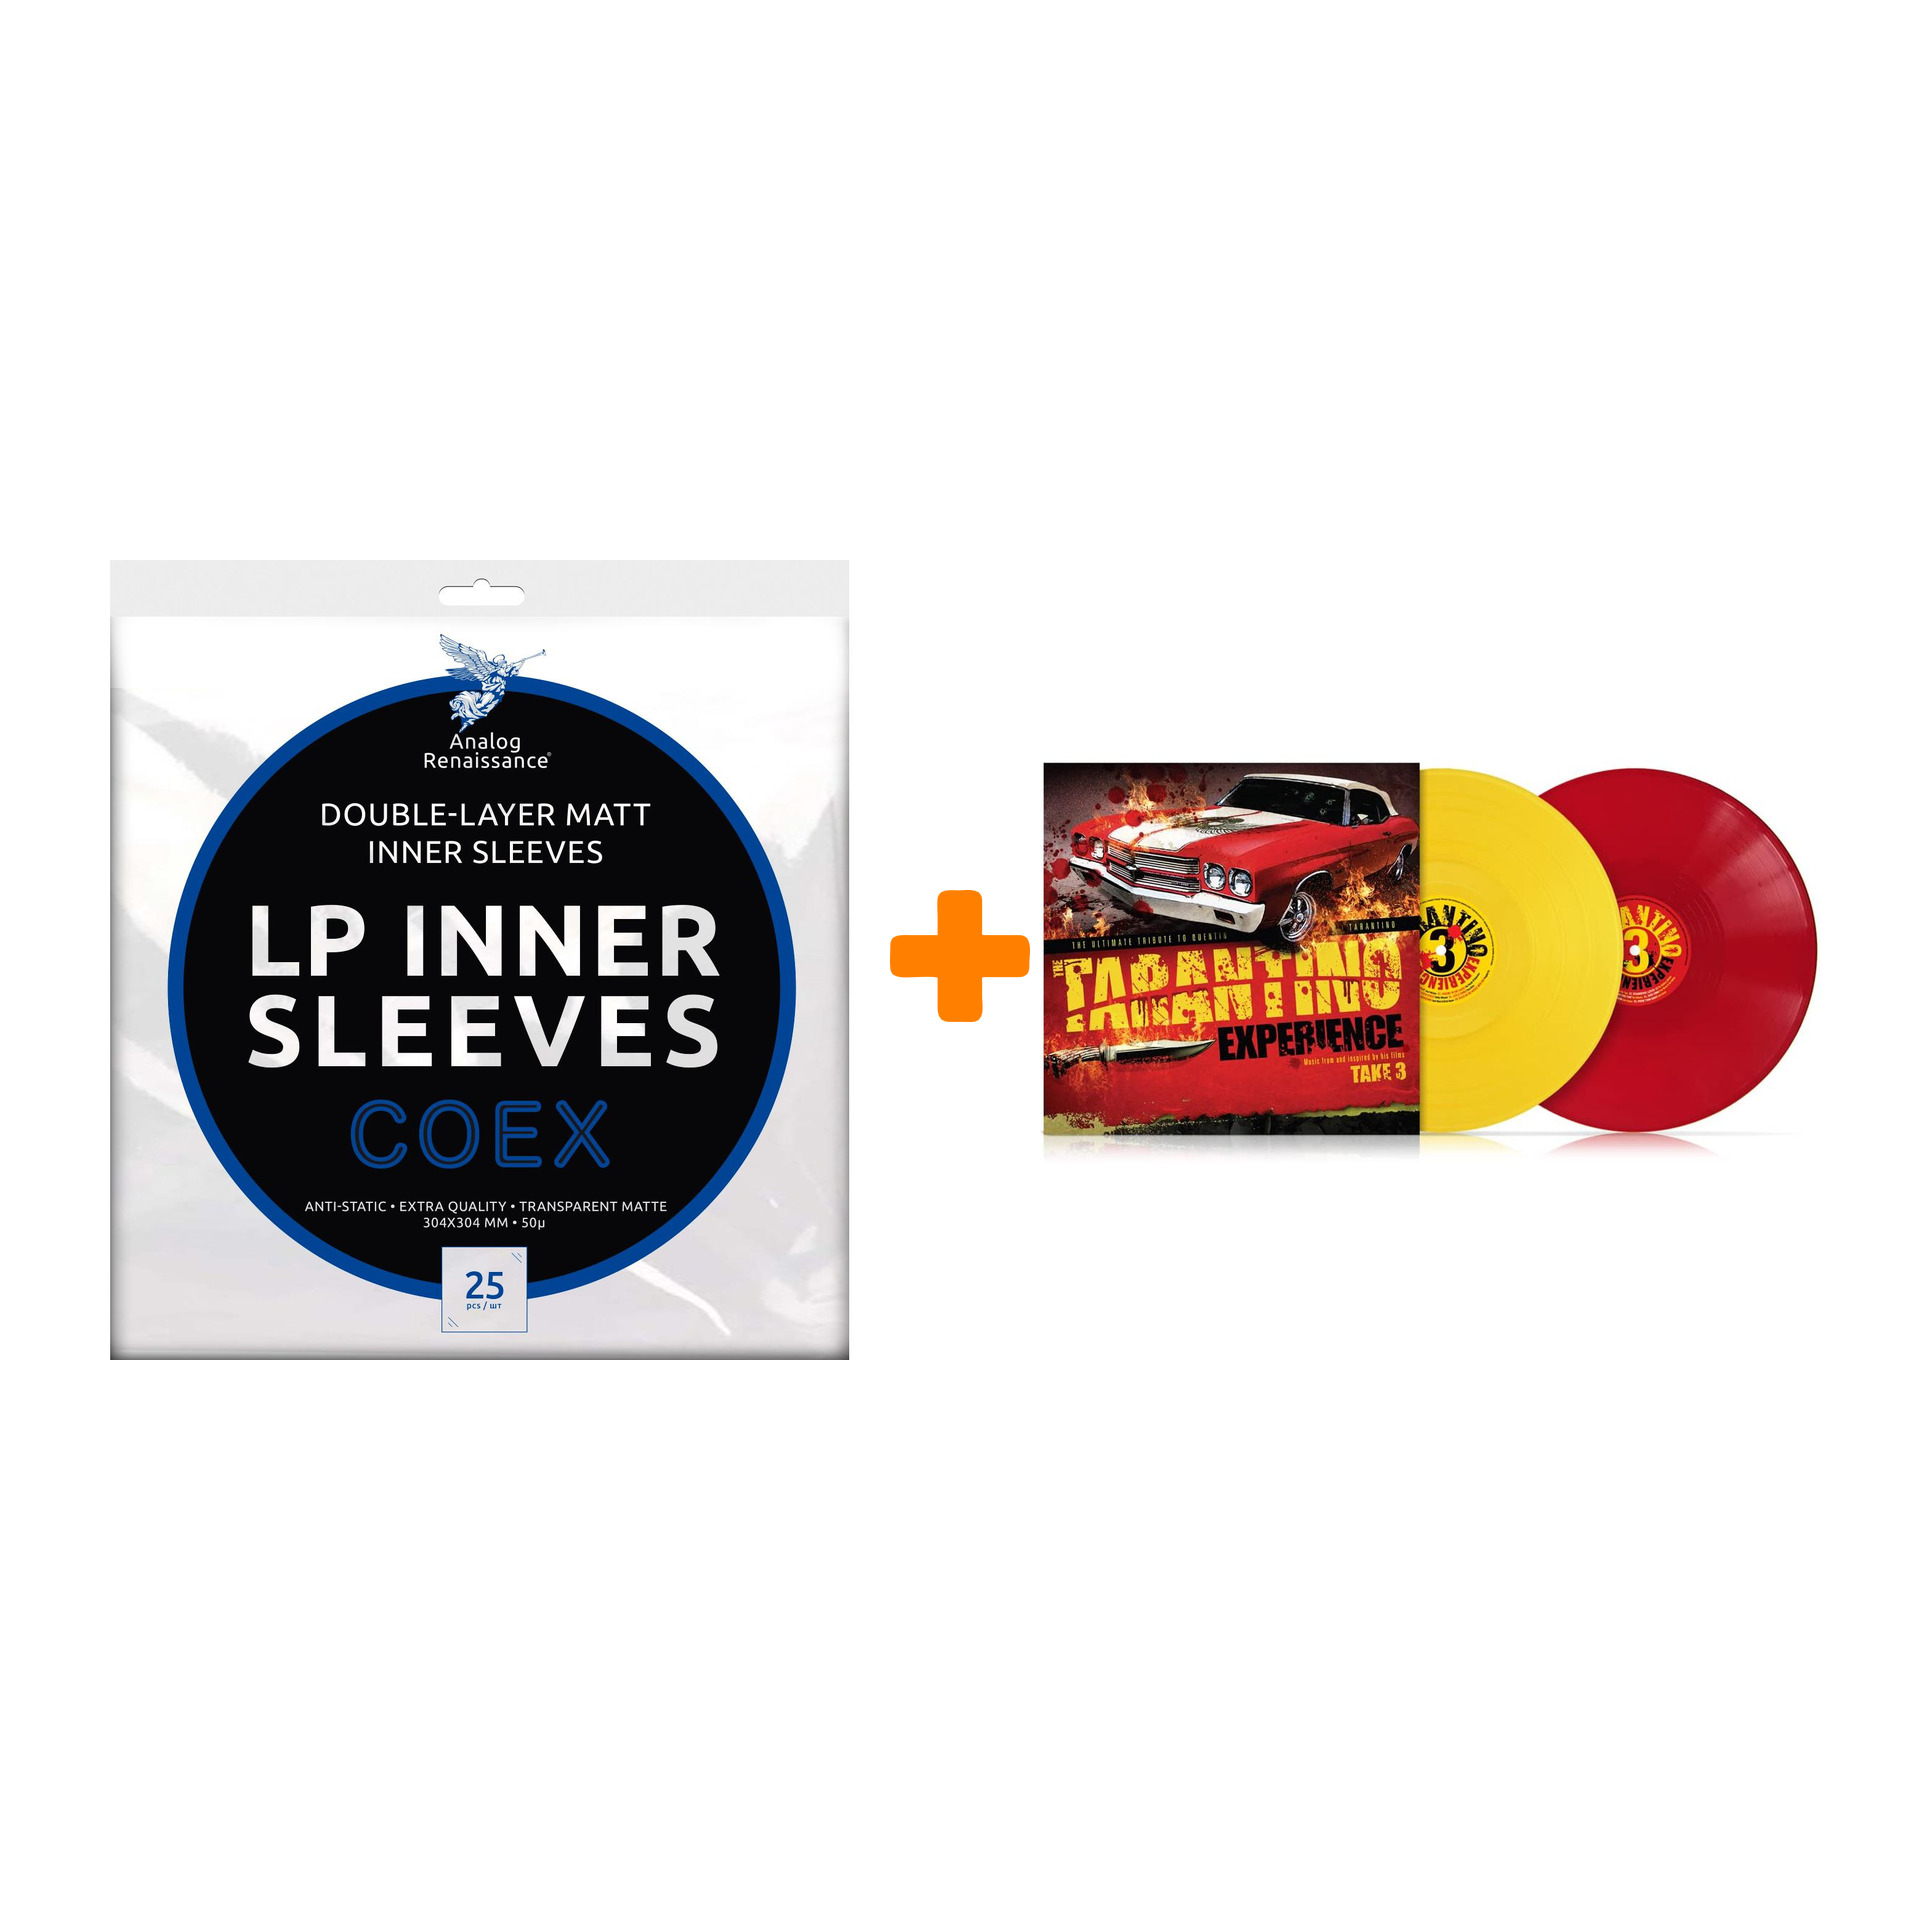 V/A Tarantino Experience Take 3 Coloured Red & Yellow Vinyl 2LP + Конверты внутренние COEX для грампластинок 12